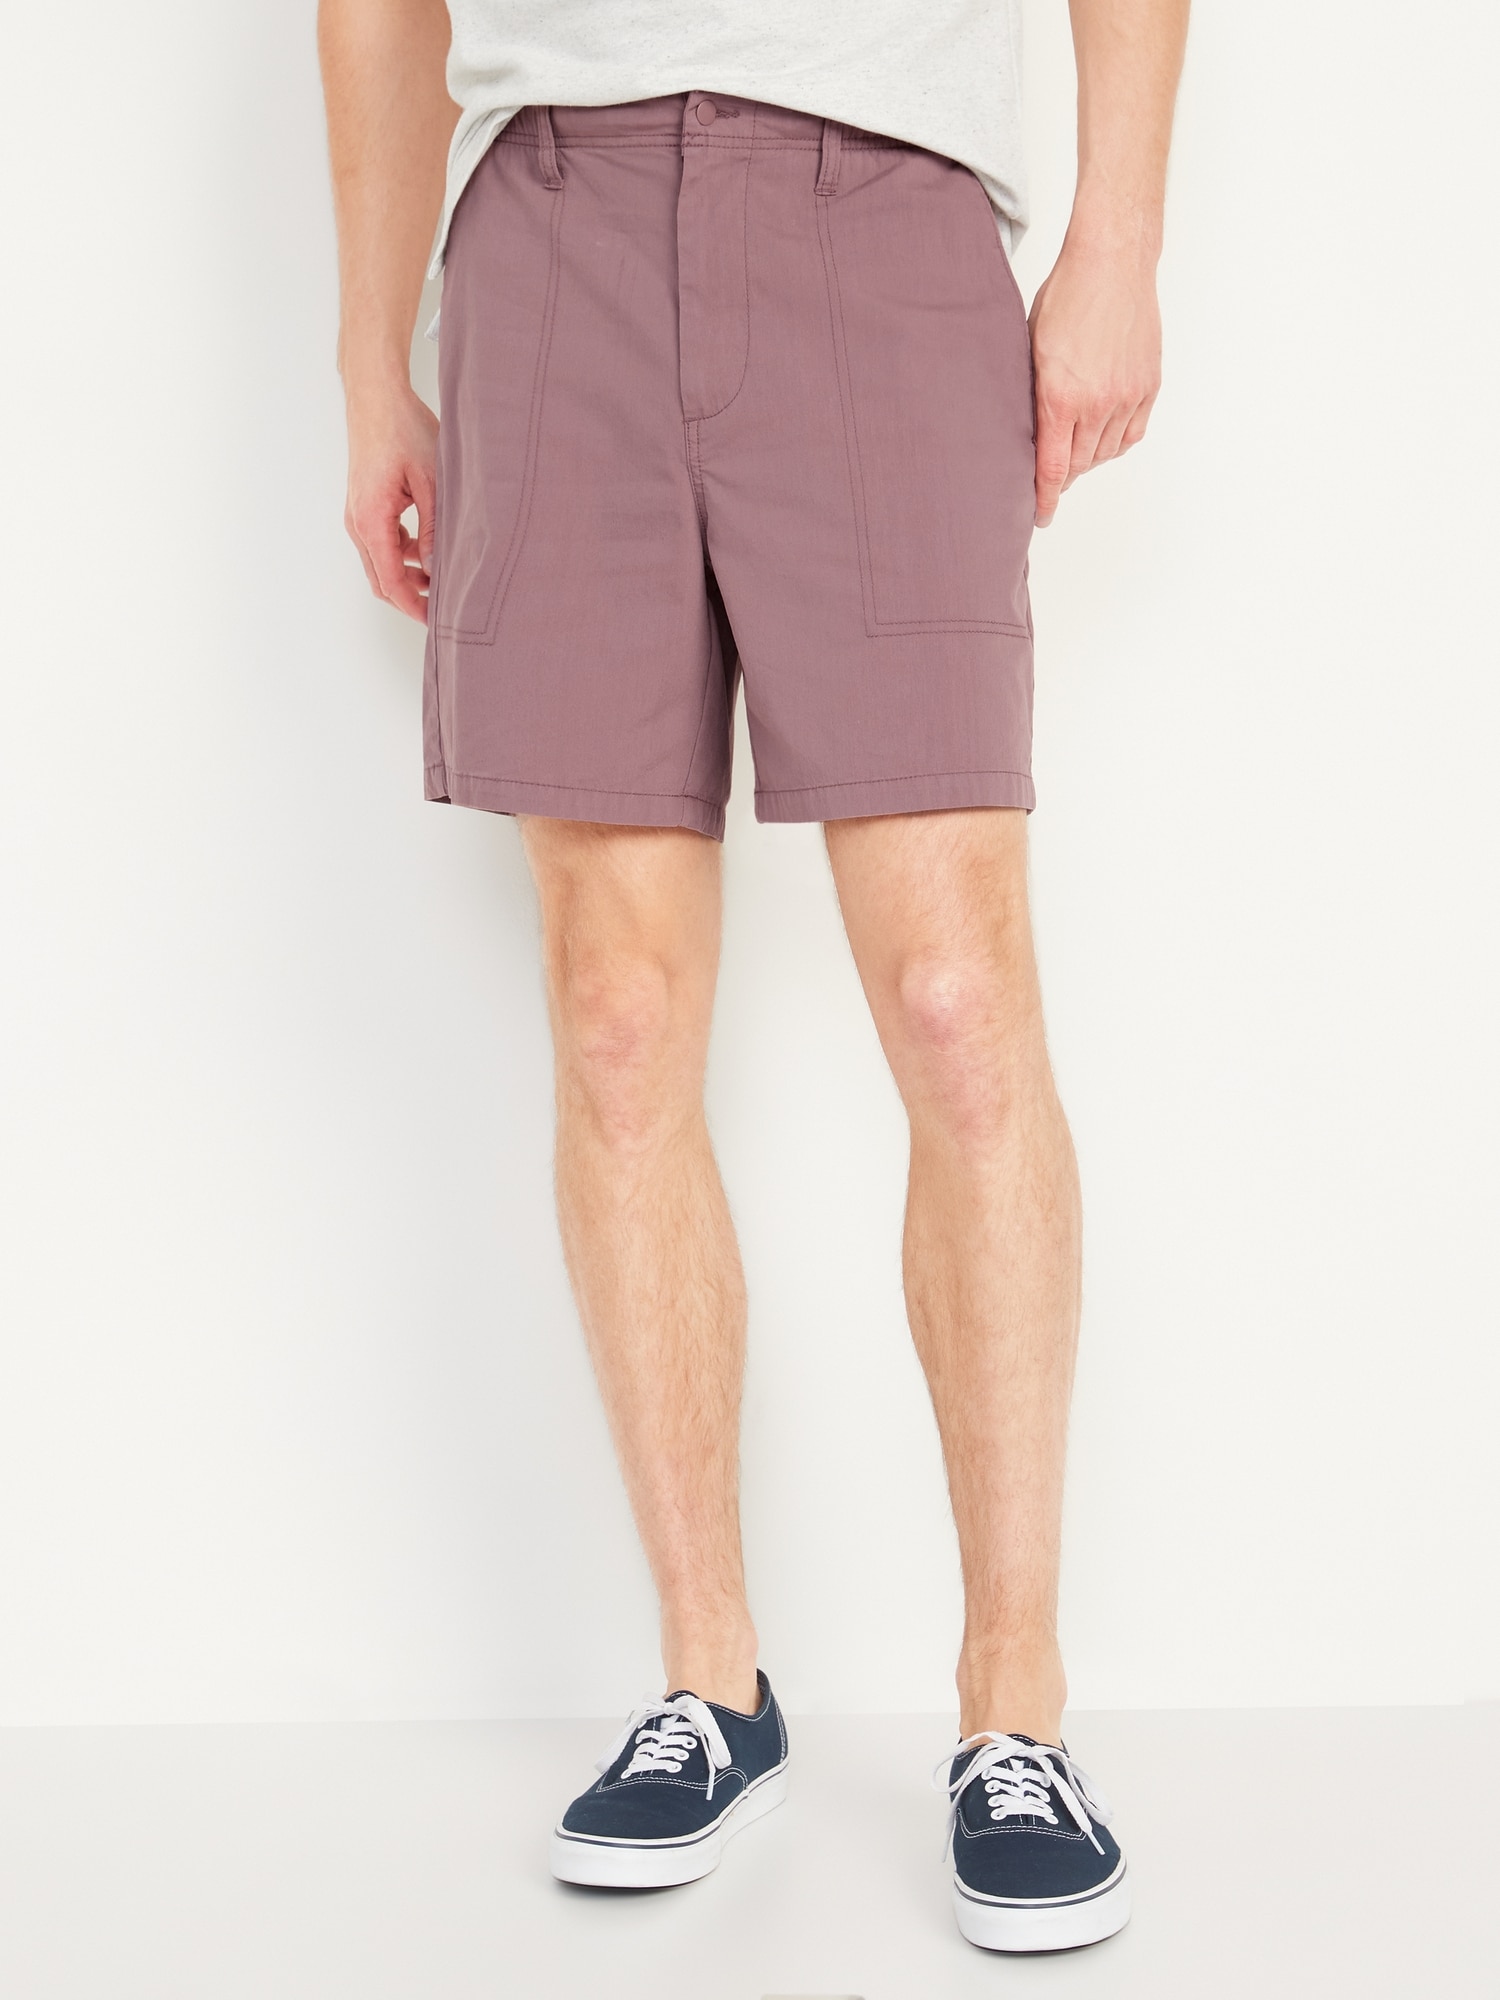 Old Navy Hybrid Tech Chino Shorts for Men -- 7-inch inseam blue. 1